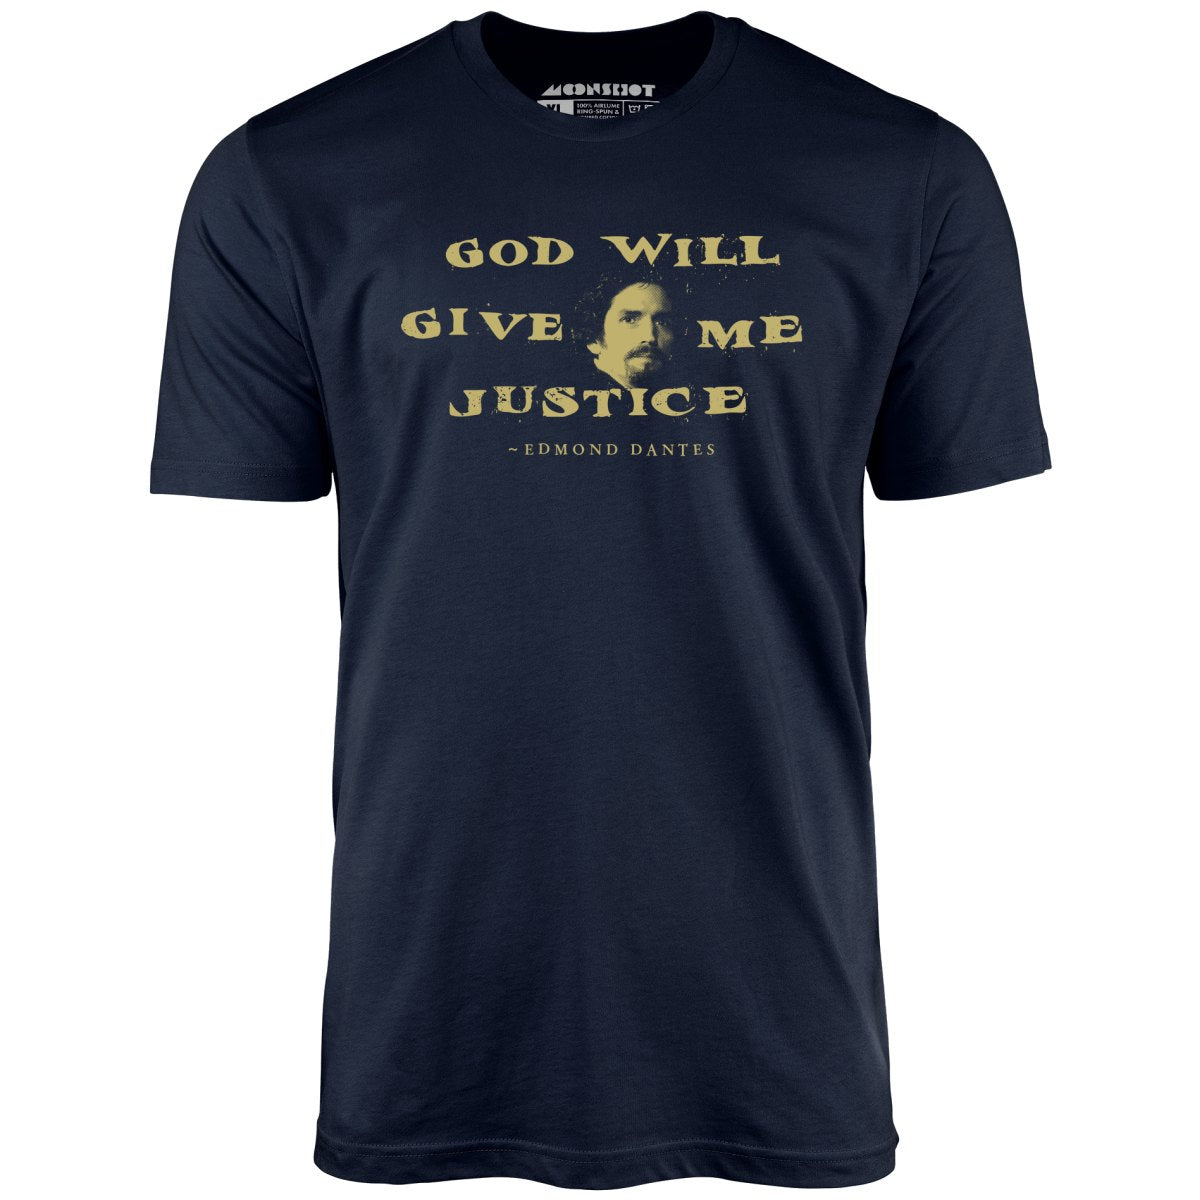 Edmond Dantes - God Will Give Me Justice - Unisex T-Shirt